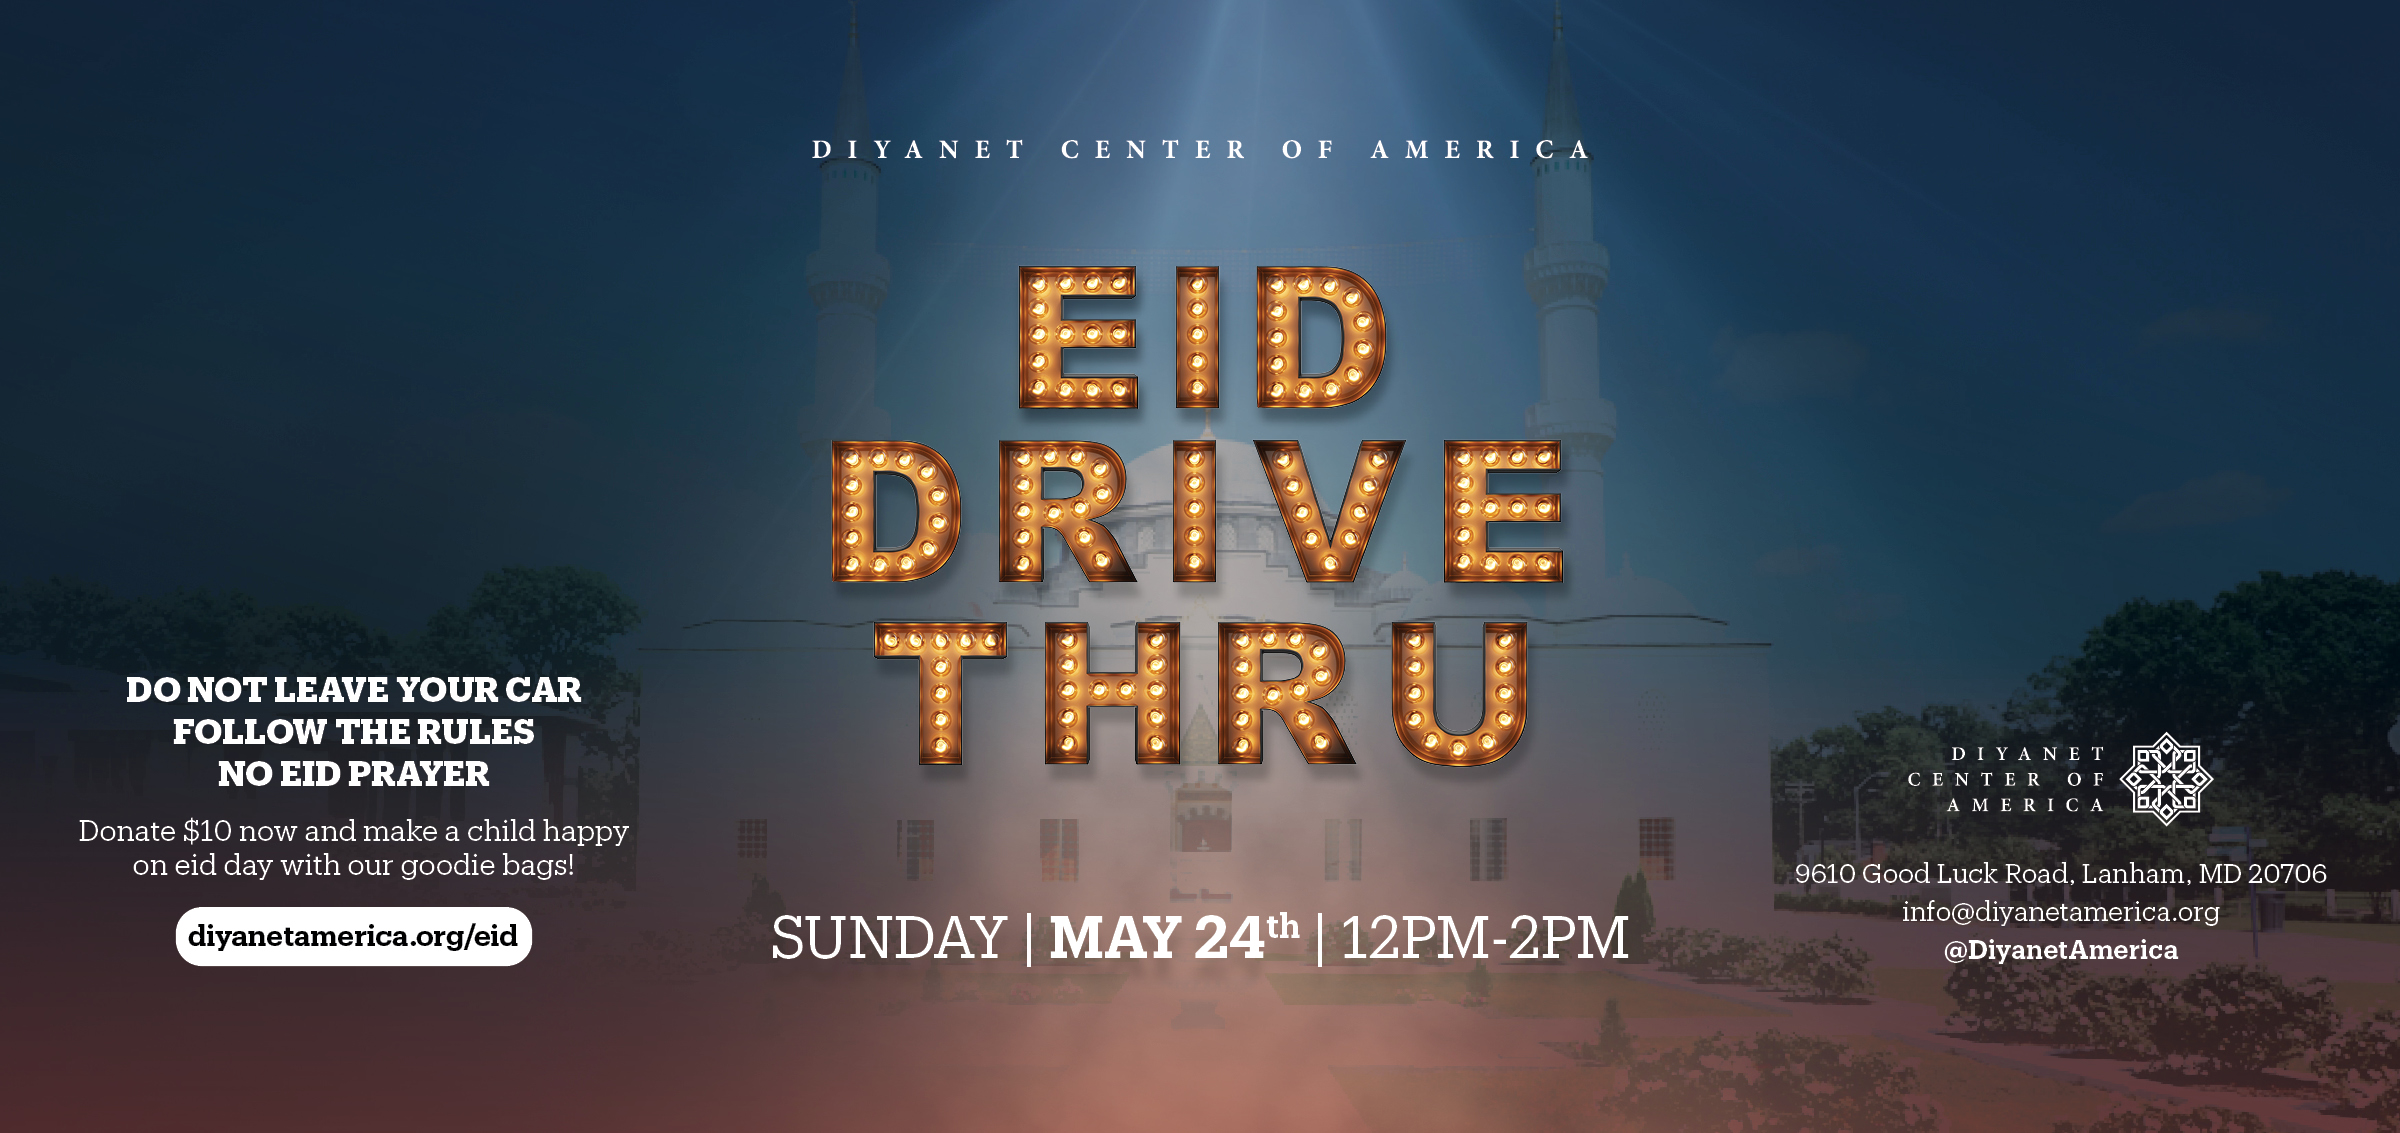 Eid al-Fitr Drive-Thru Celebration Event